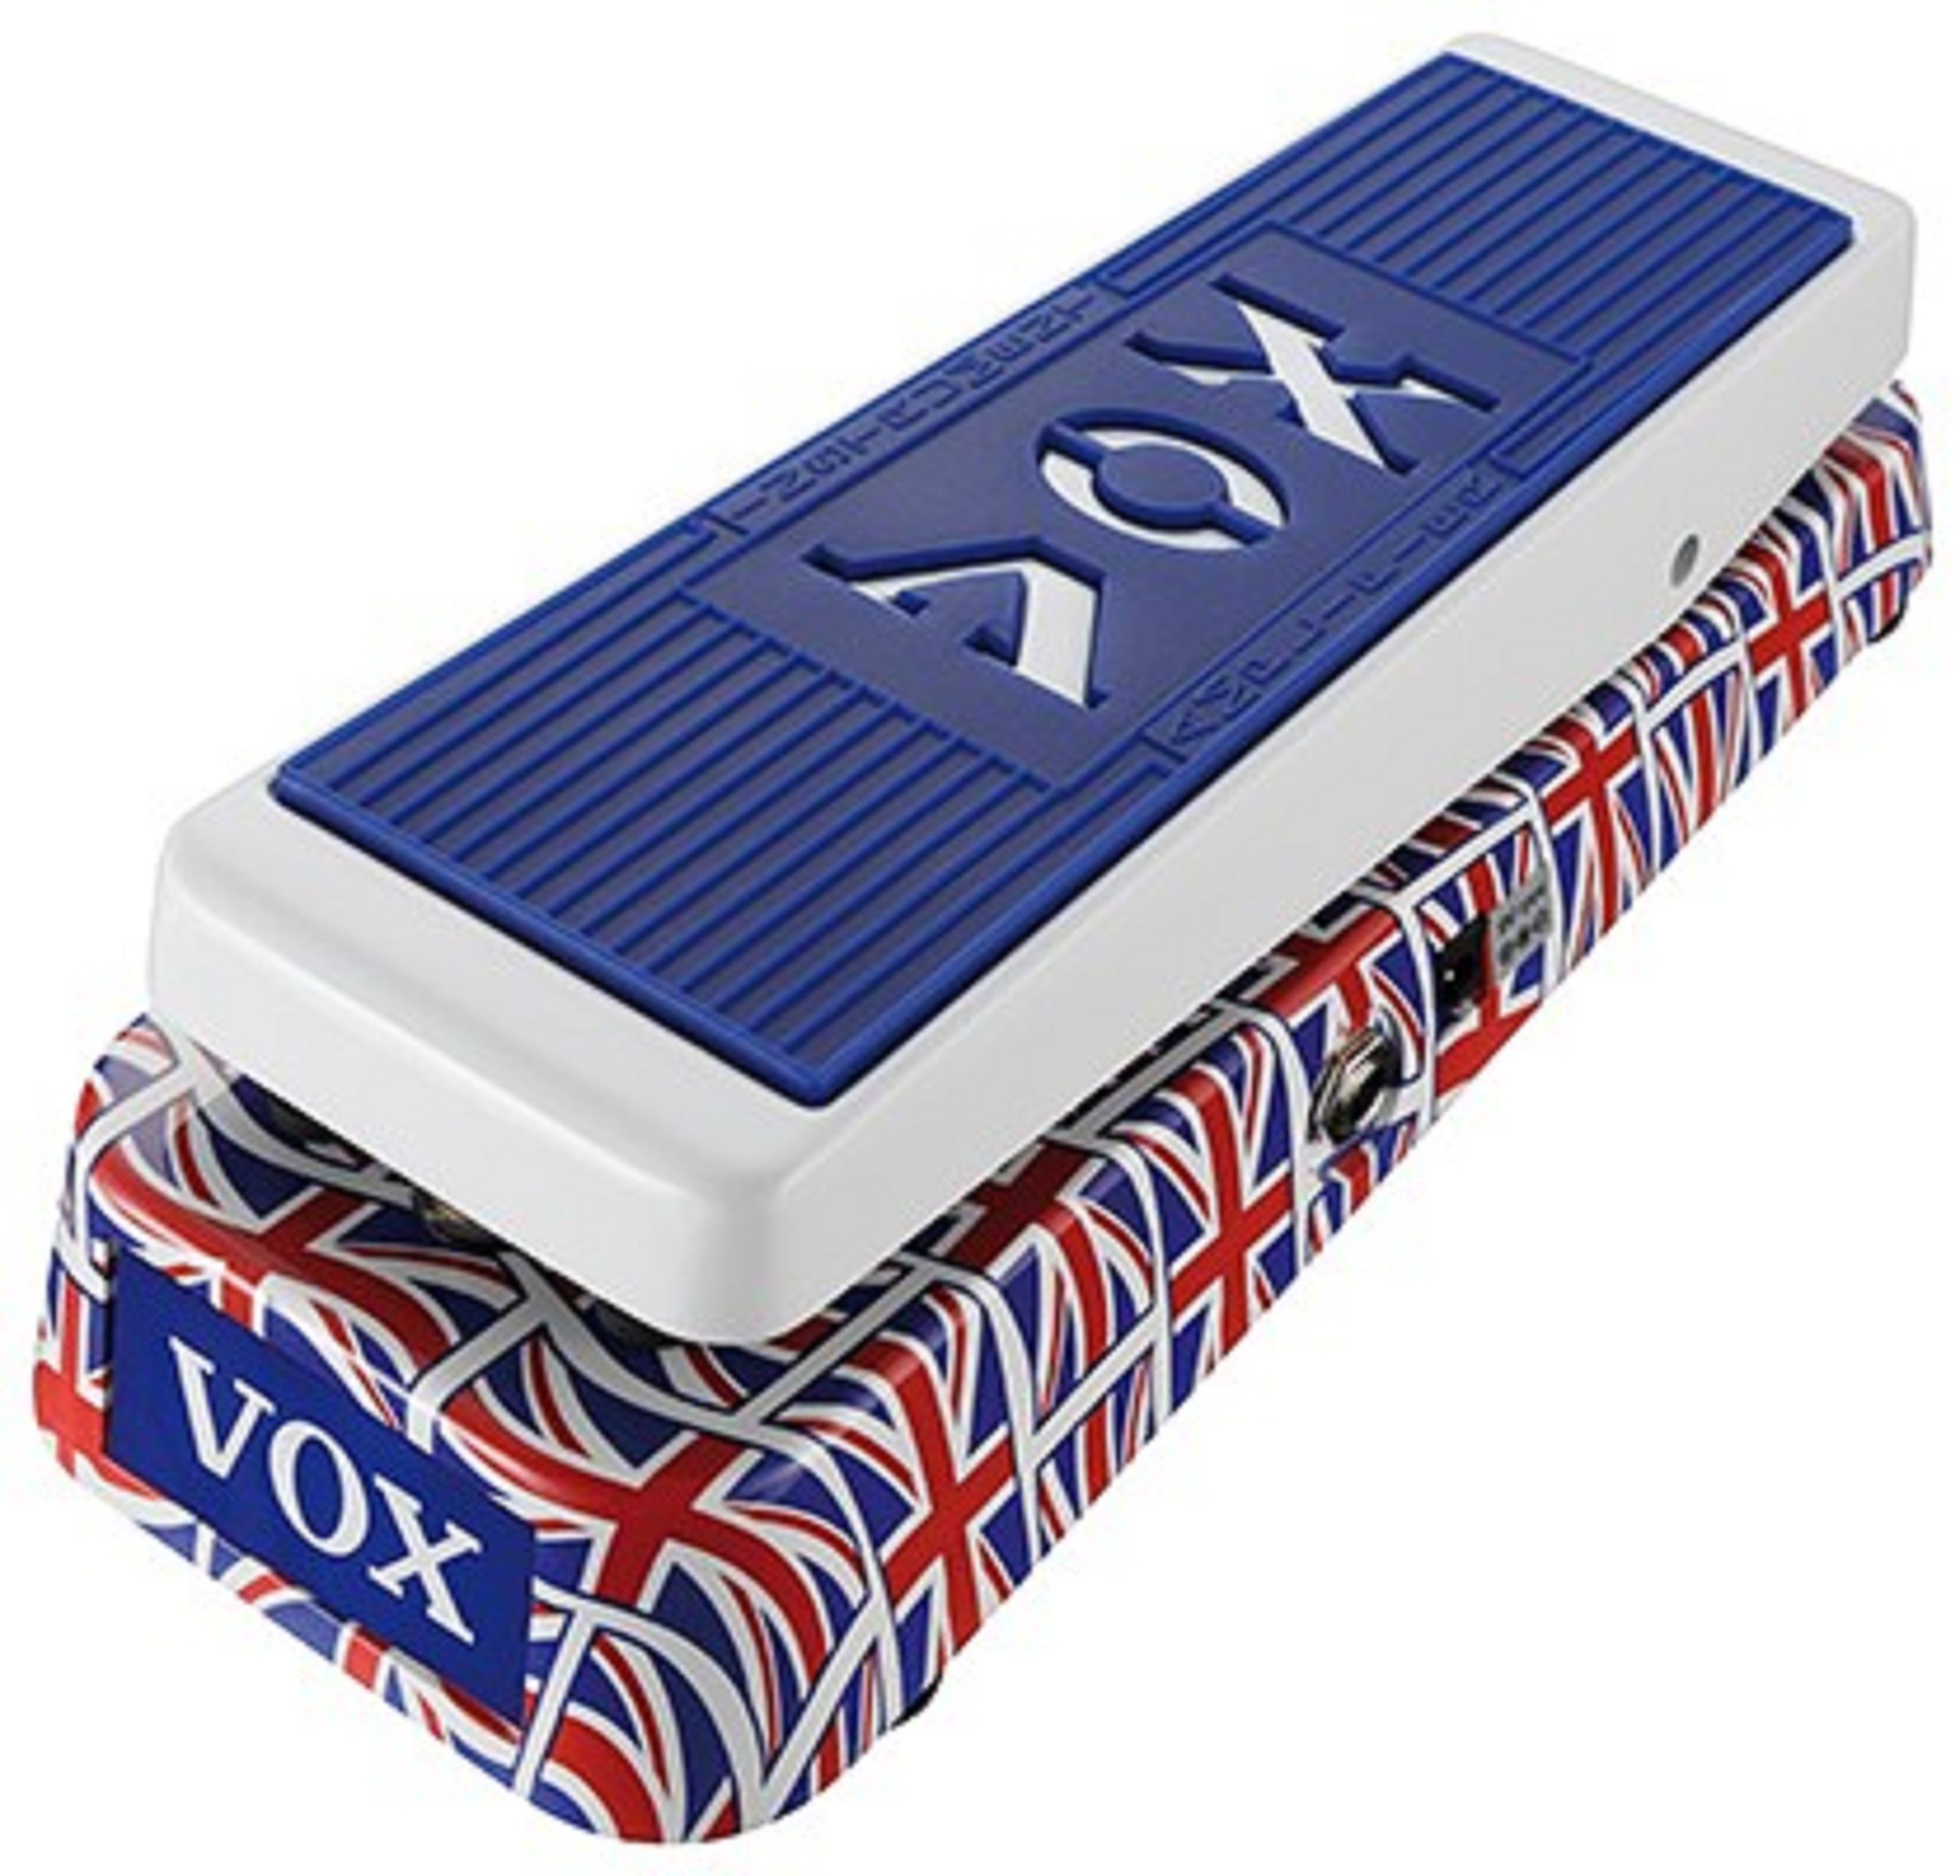 VOX 847 Union Jack Limited Edition